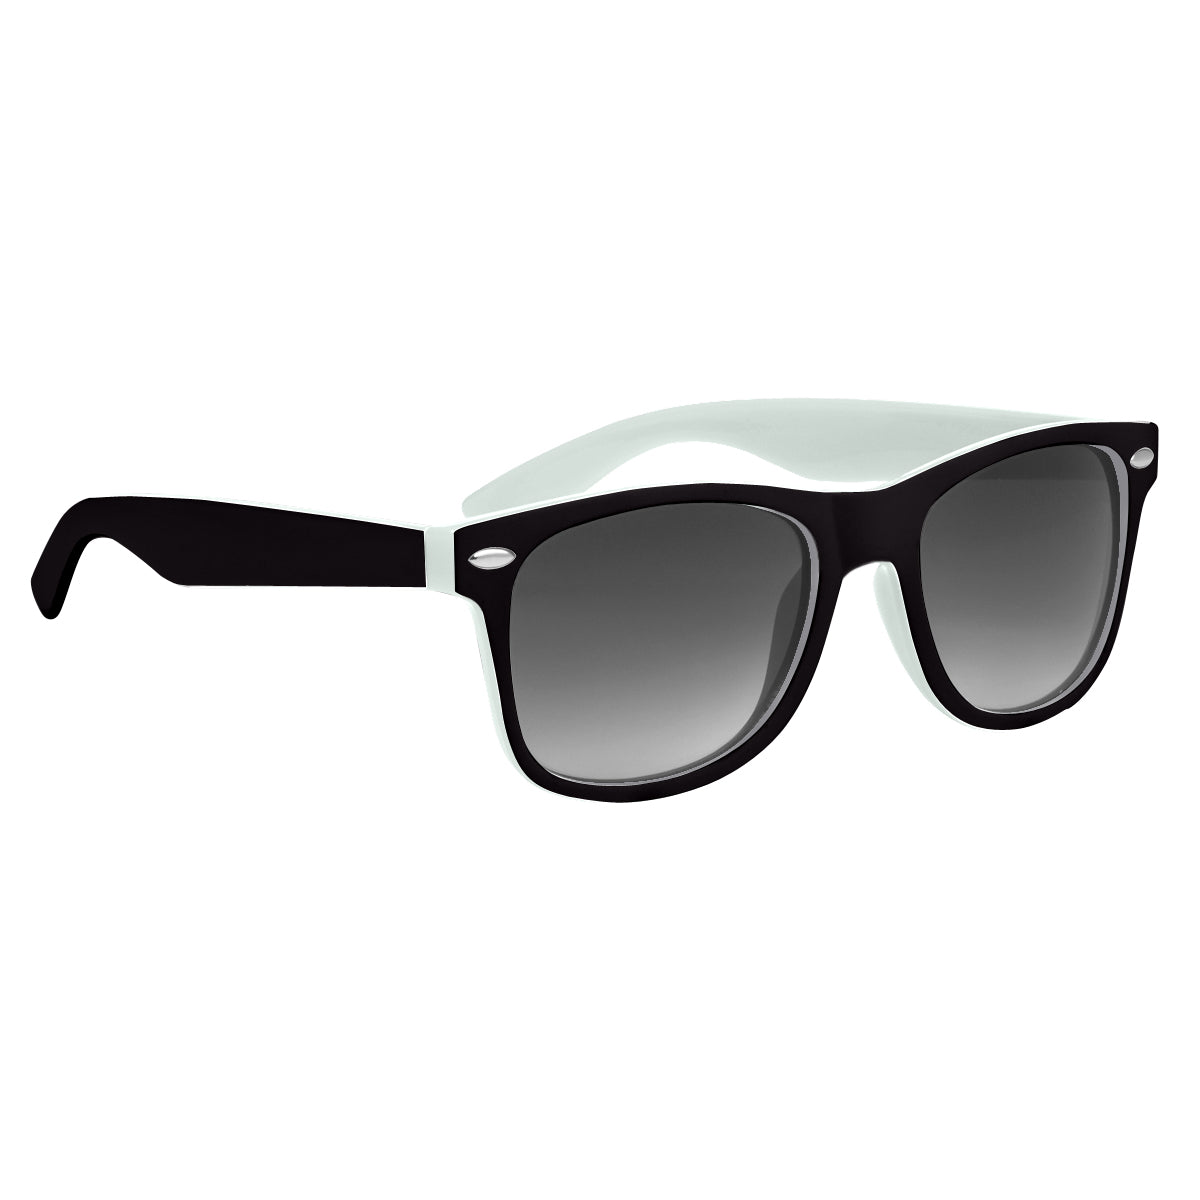 Malibu Two-Tone Sunglasses